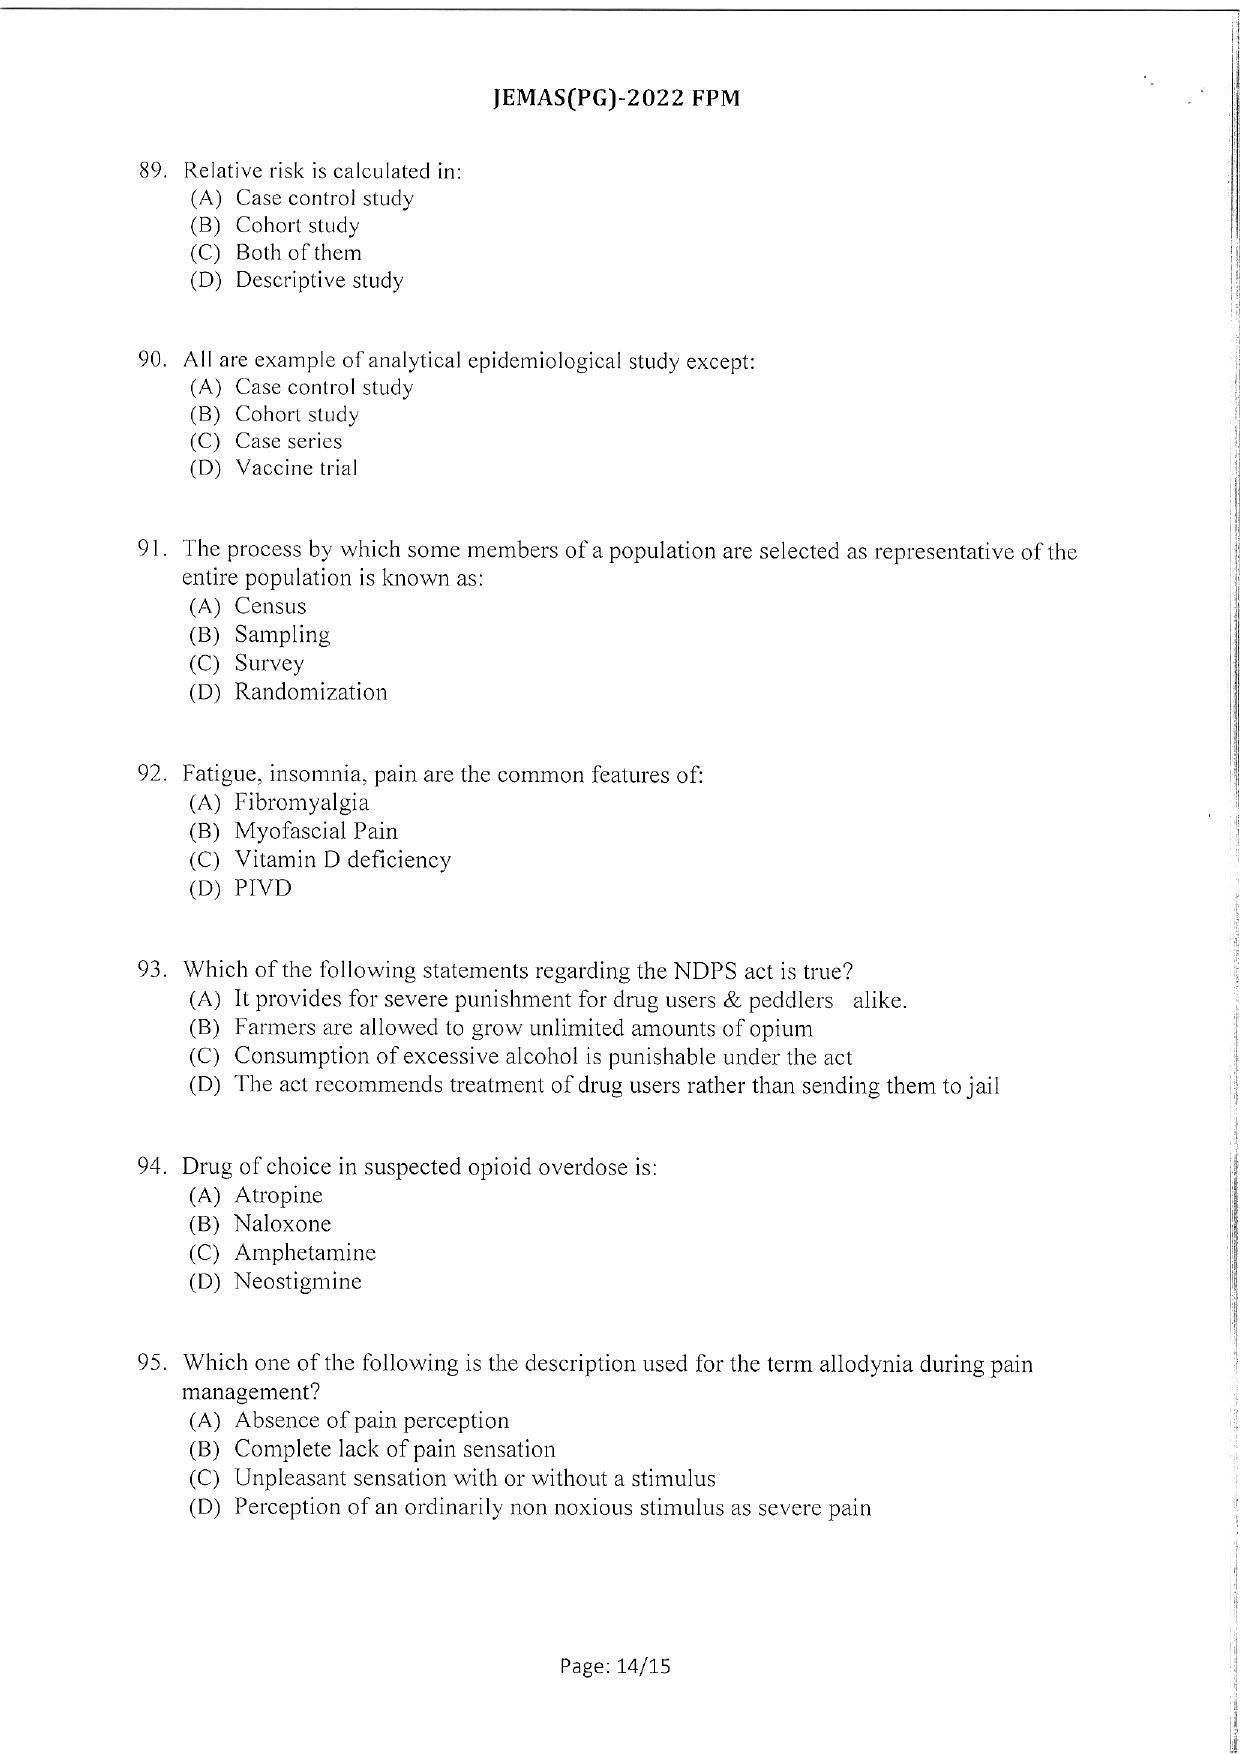 WBJEEB JEMAS (PG) 2022 FPM Question Paper - Page 16